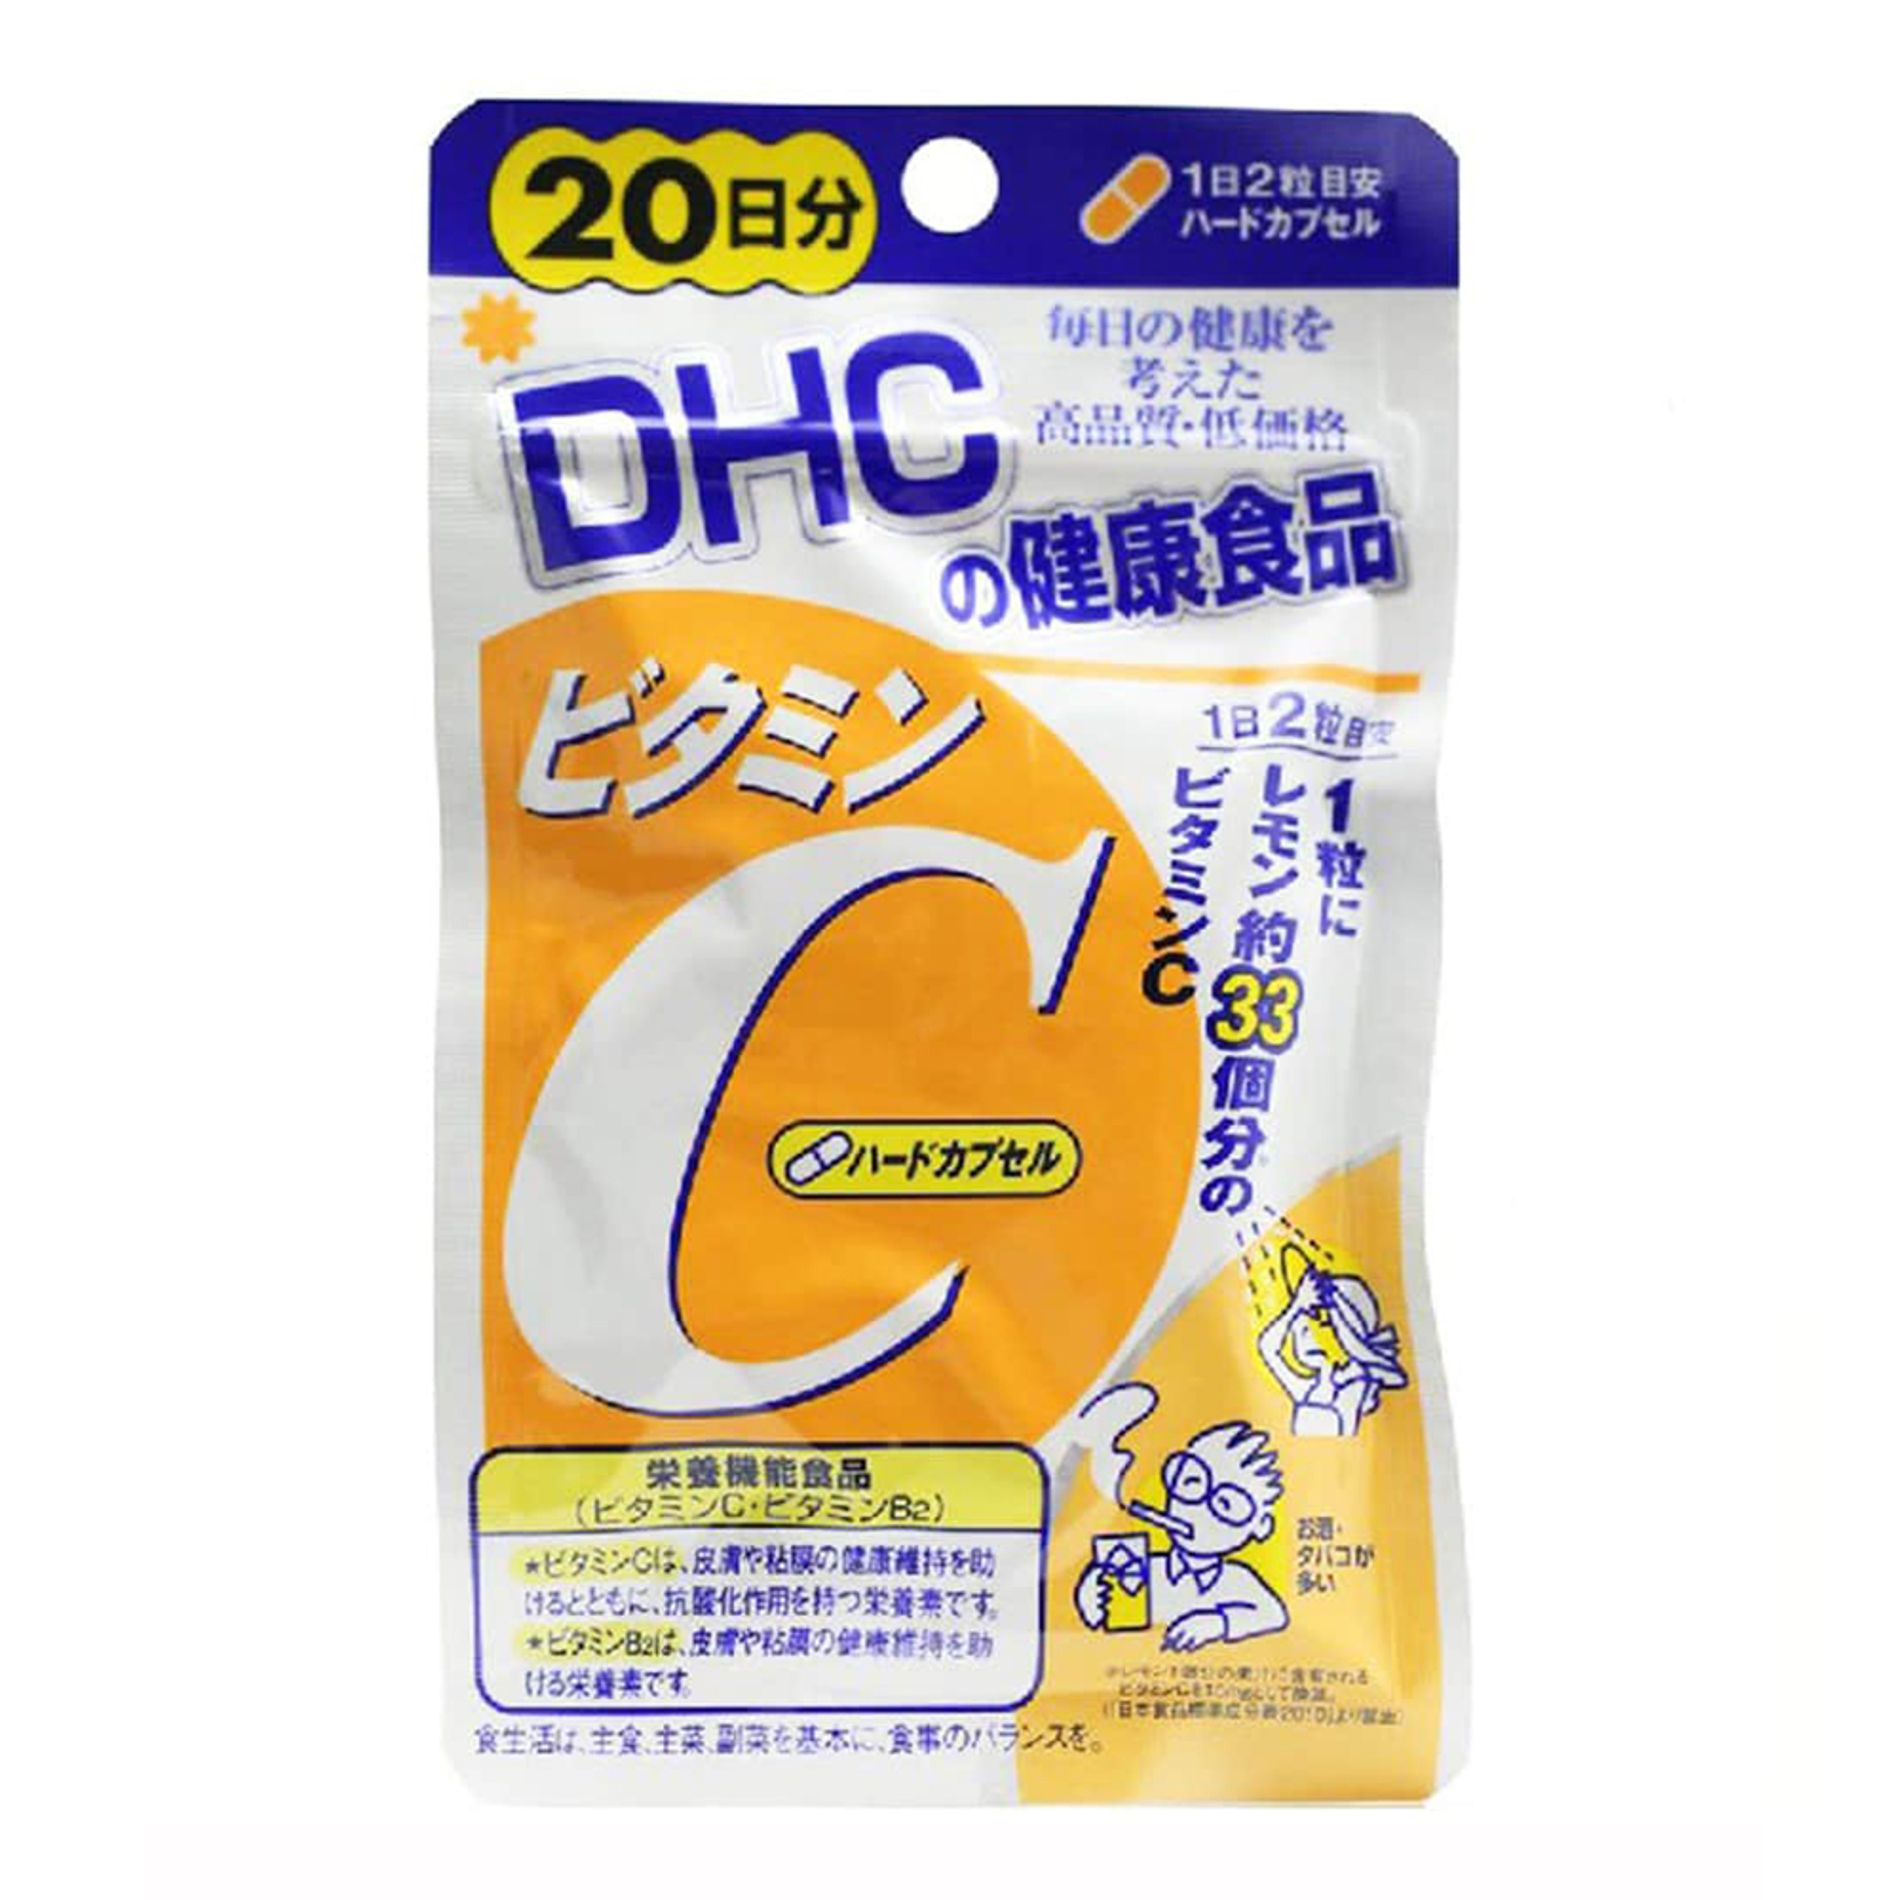 thuc-pham-bao-ve-suc-khoe-dhc-vitamin-c-hard-capsule-30-days-suplly-6